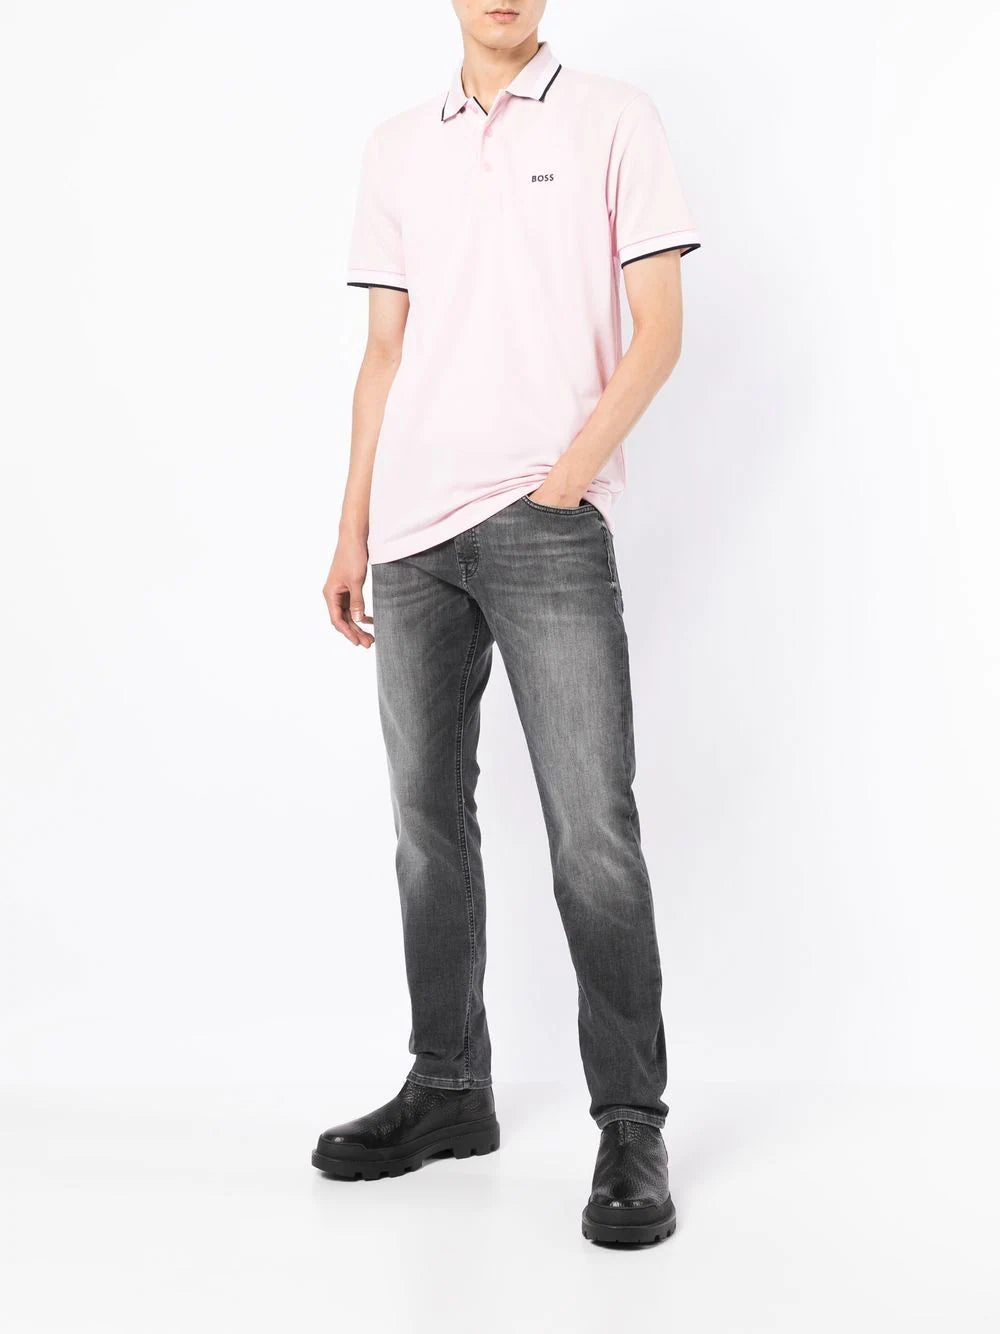 BOSS Polo Shirt Open Pink - MAISONDEFASHION.COM